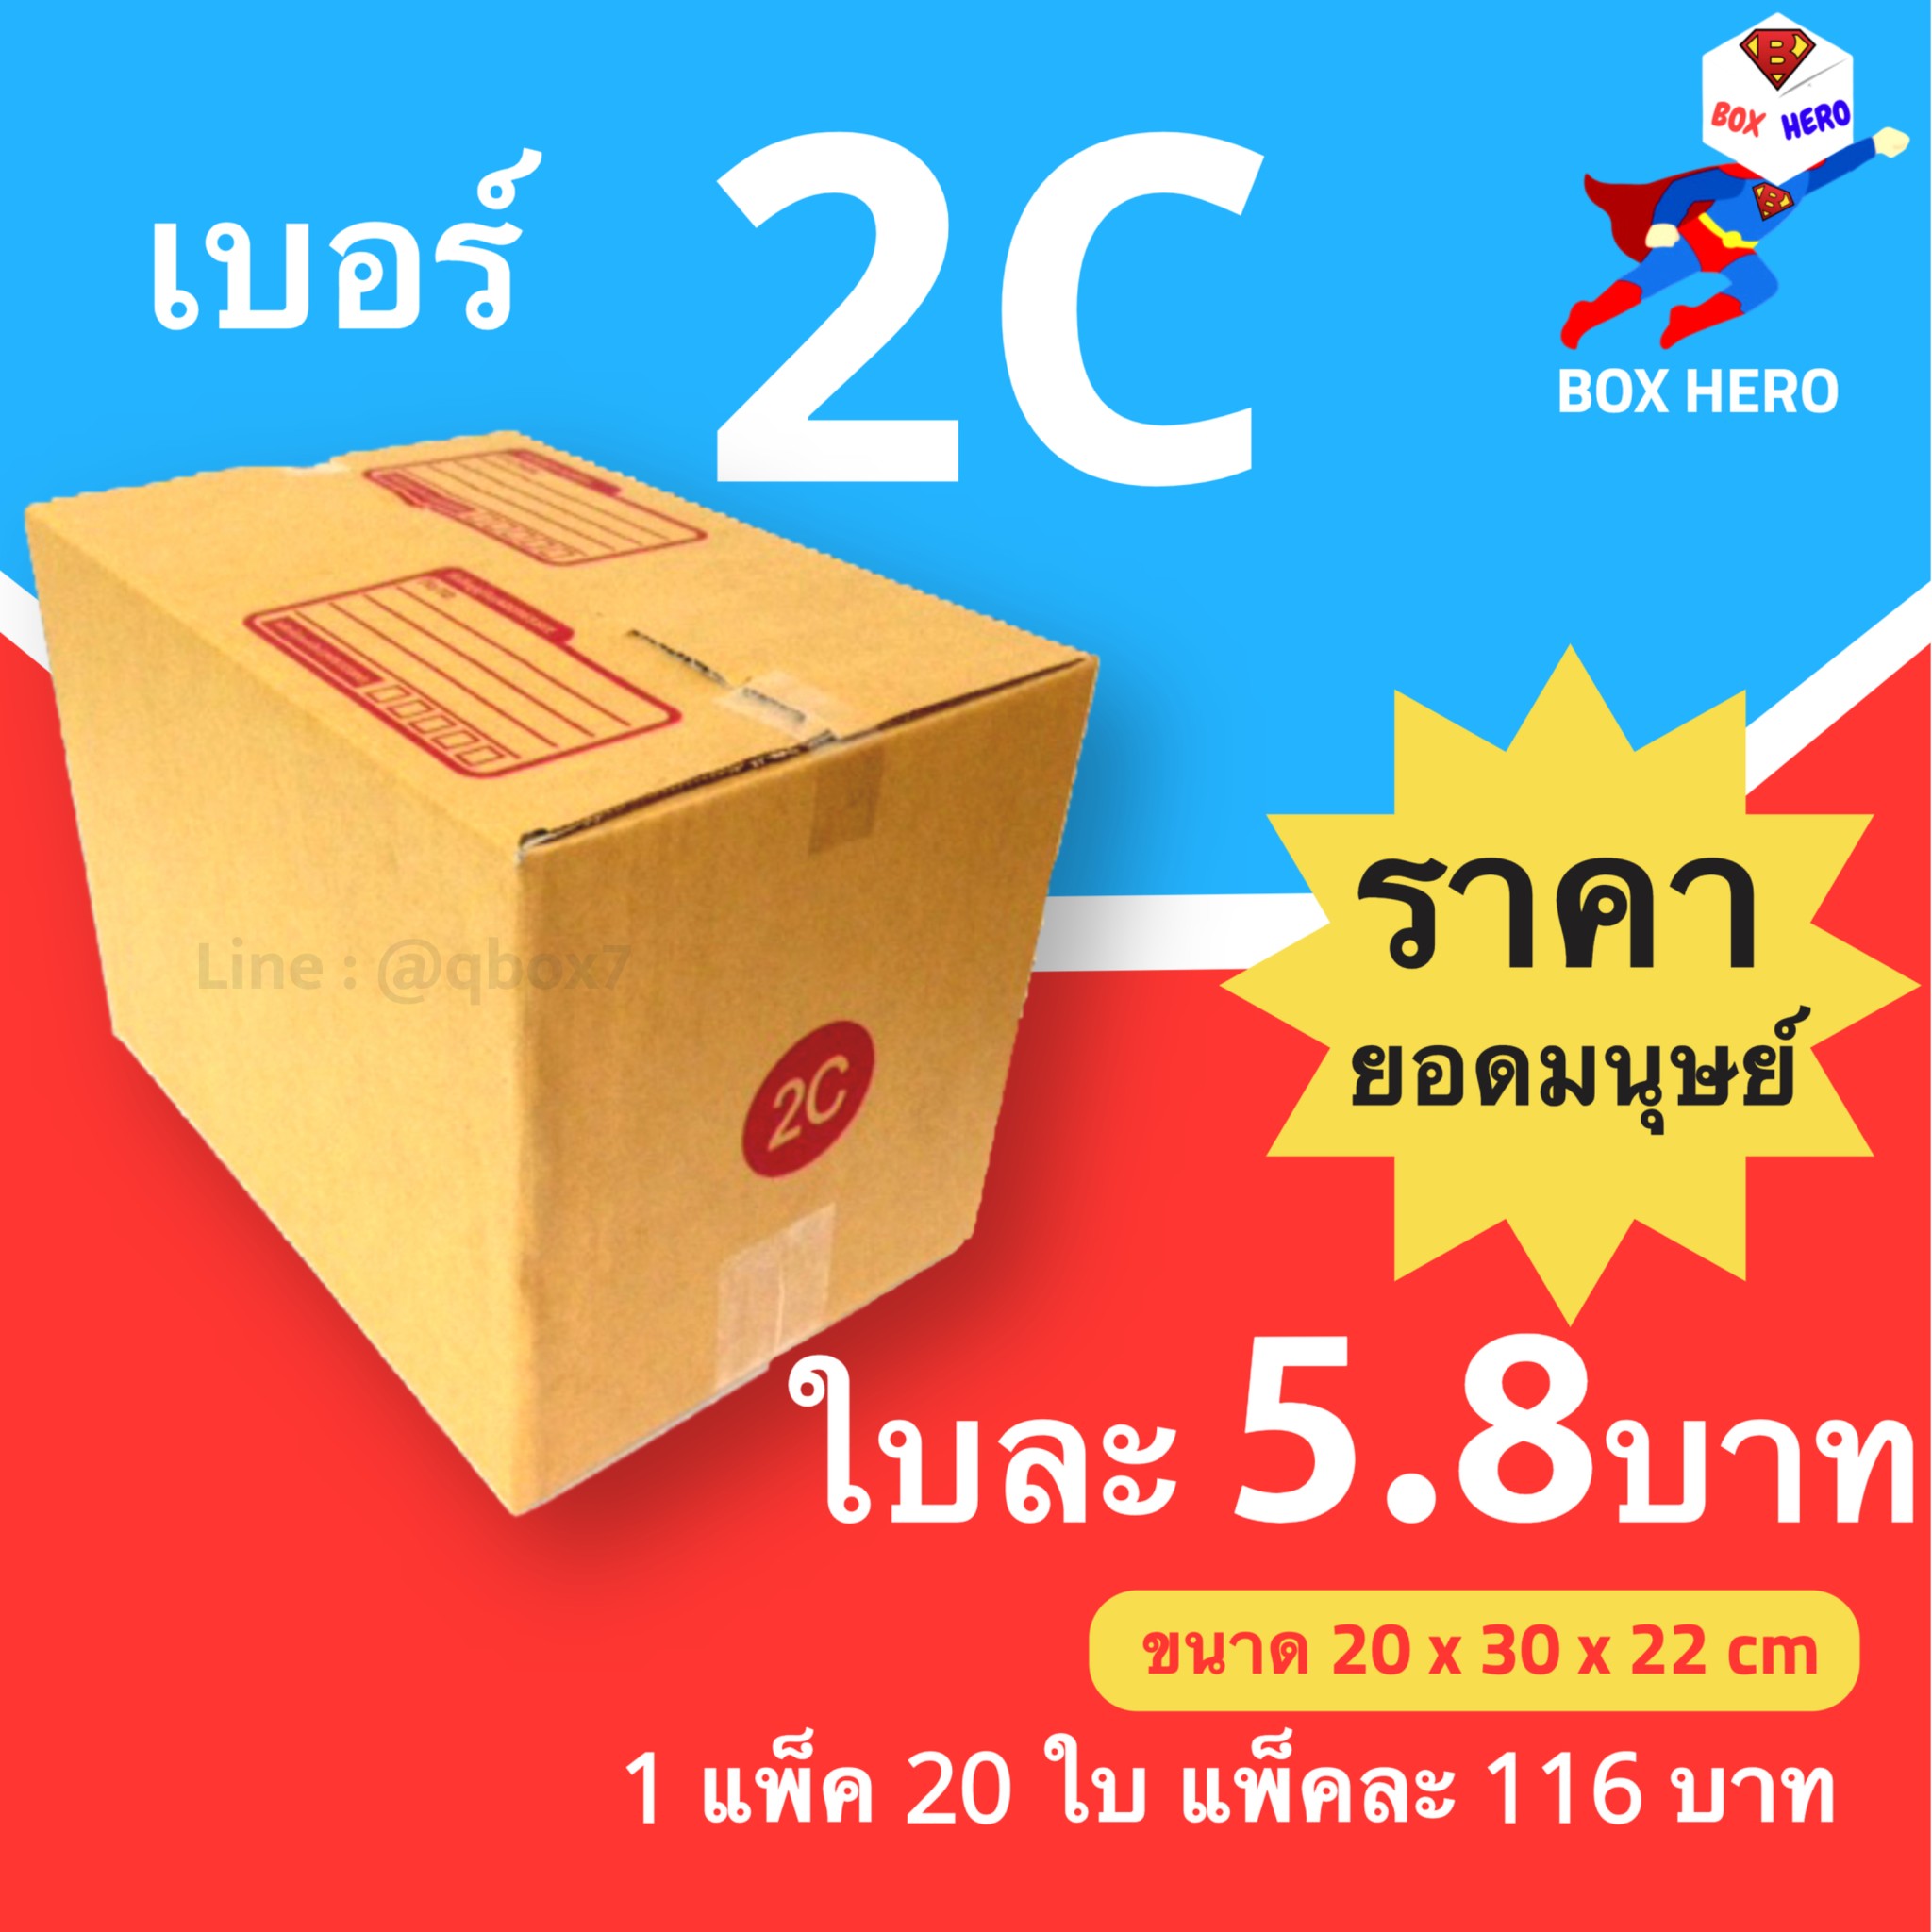 BoxHero กล่องไปรษณีย์เบอร์ 2C มีพิมพ์จ่าหน้า กล่องพัสดุ (20 ใบ 72 บาท)